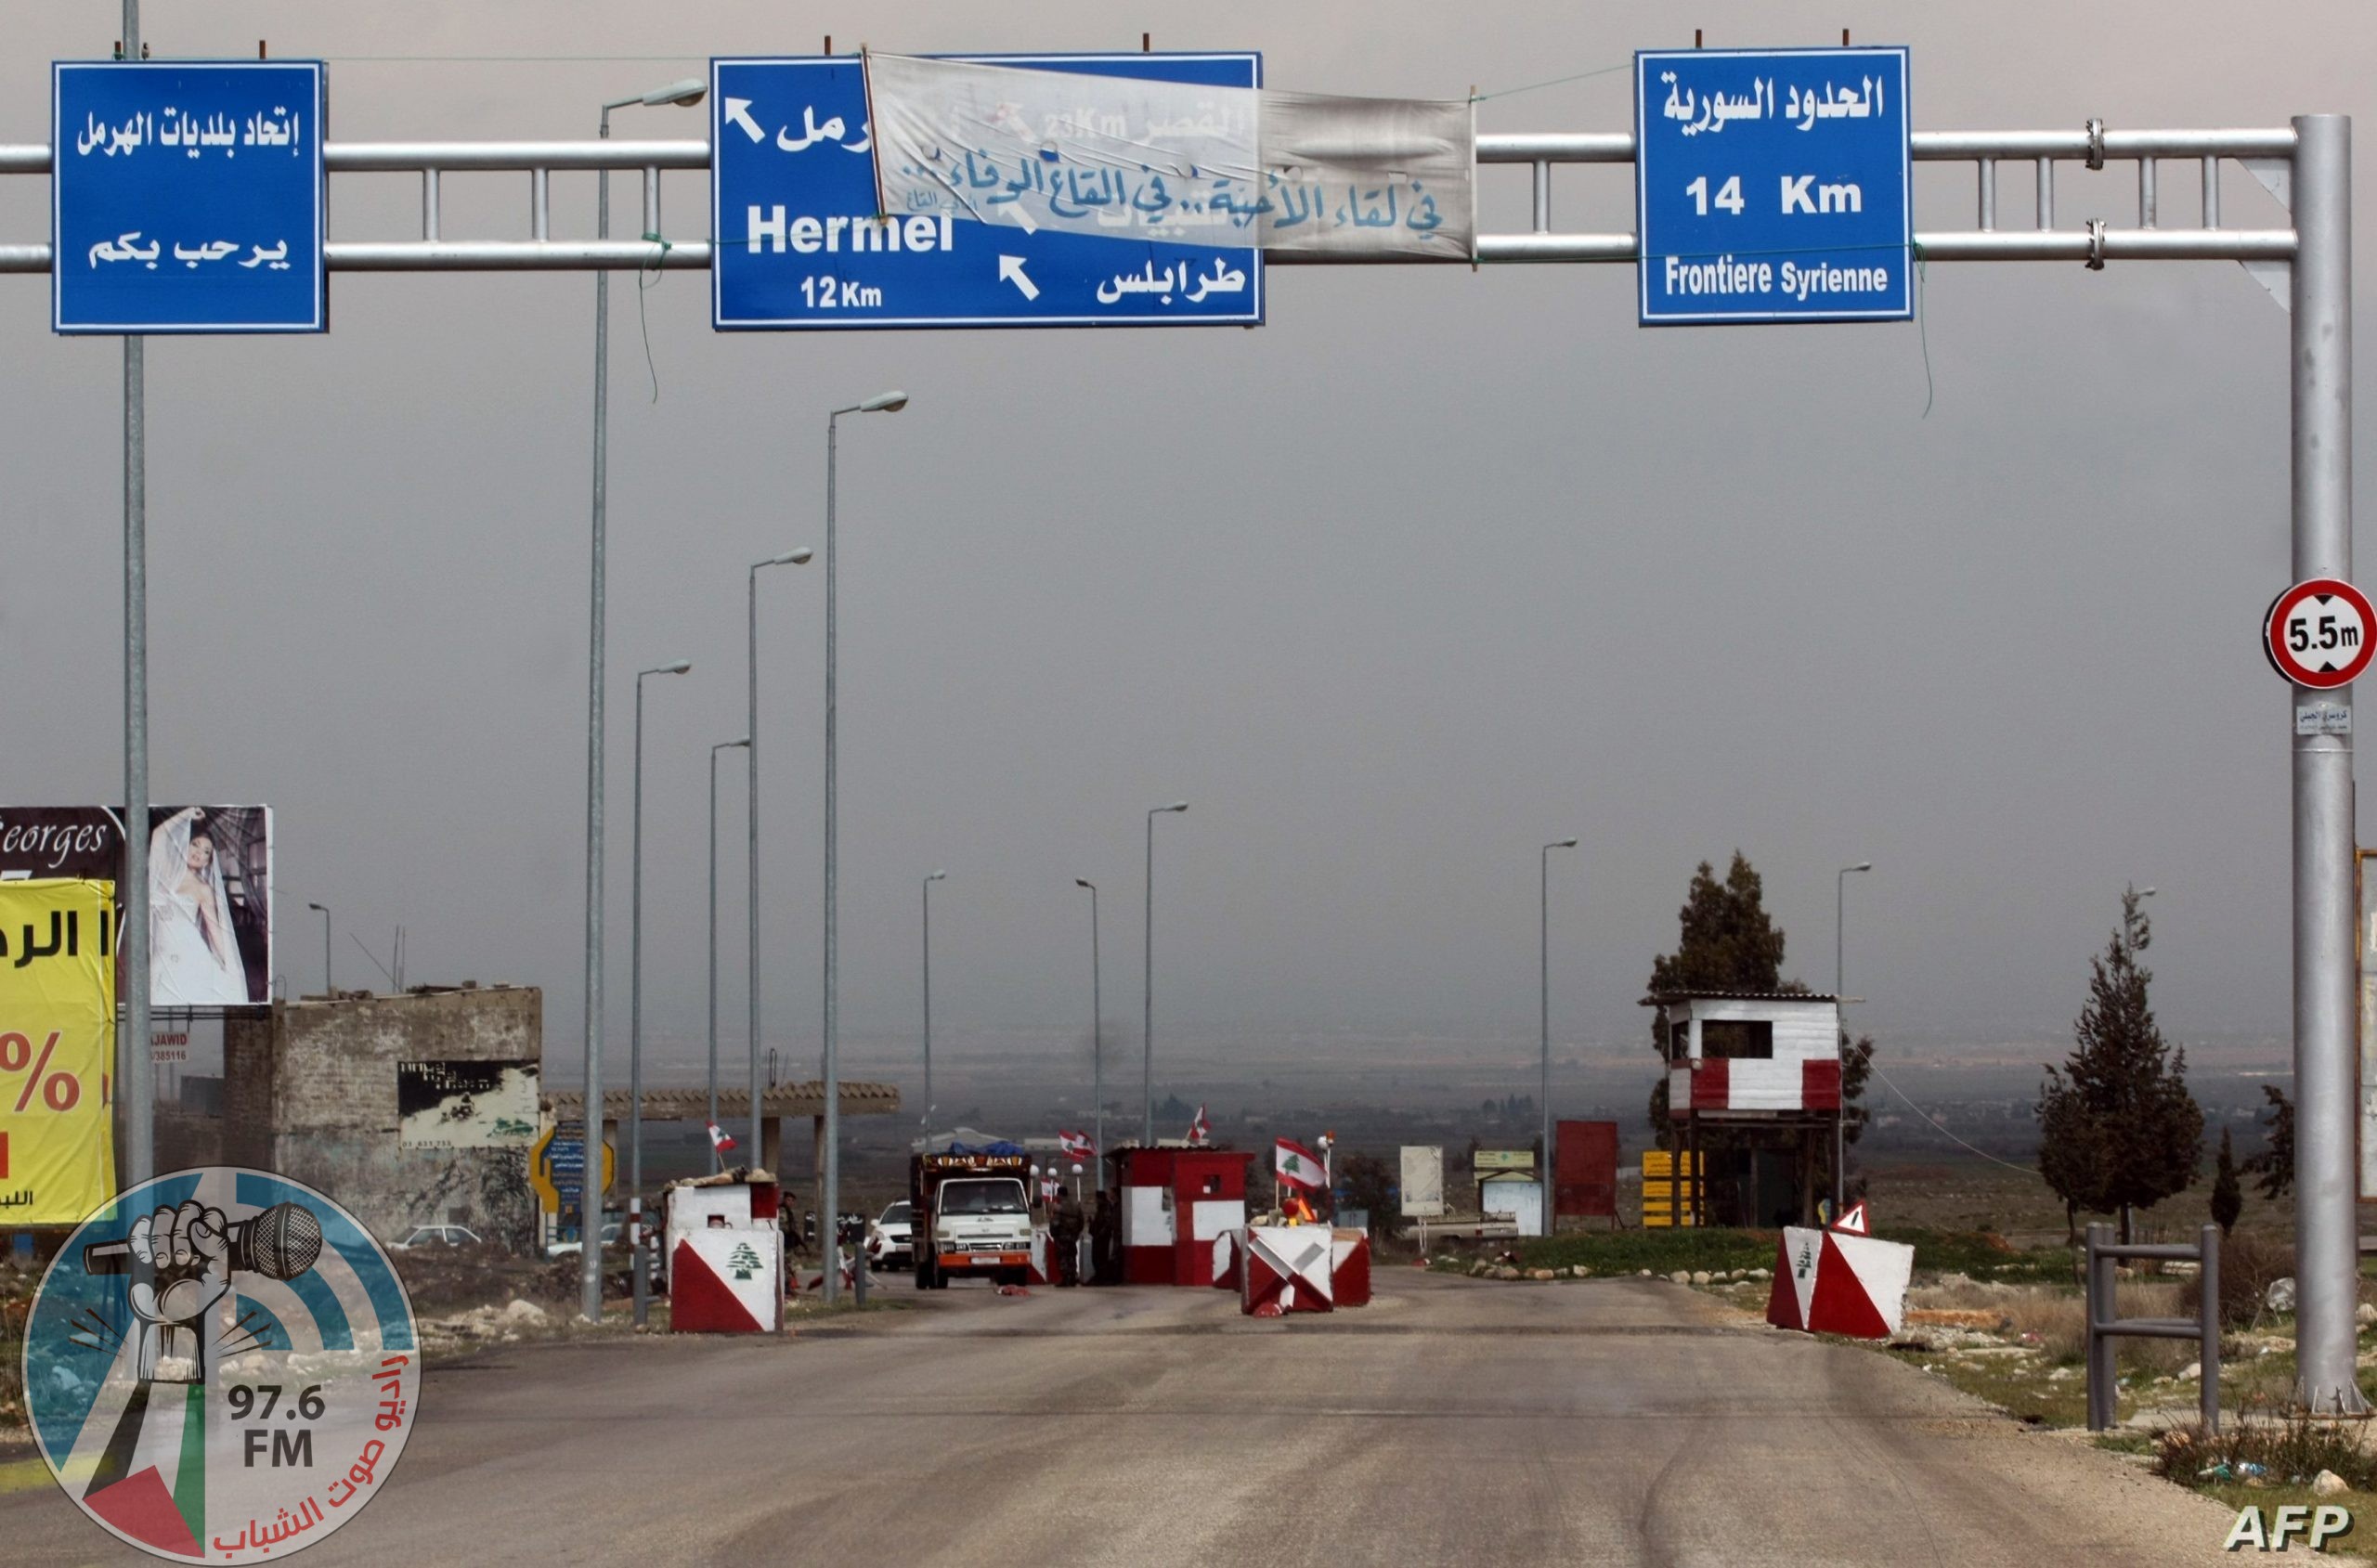 المجلس الإسلامي الشيعي: قرار سوريا فتح حدودها مع لبنان إيجابي